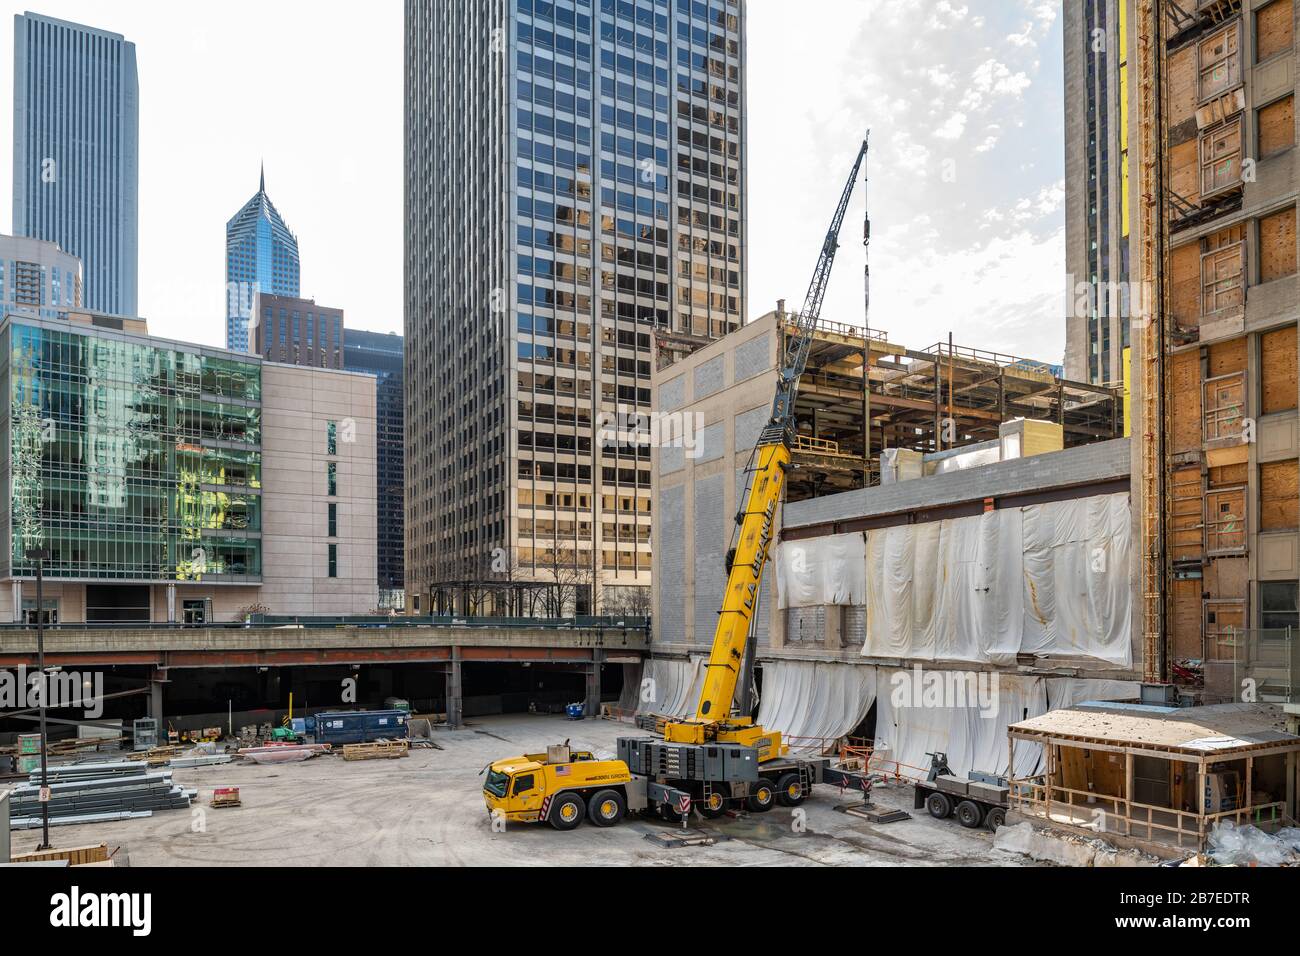 Chicago Tribune building under renovation Stock Photo